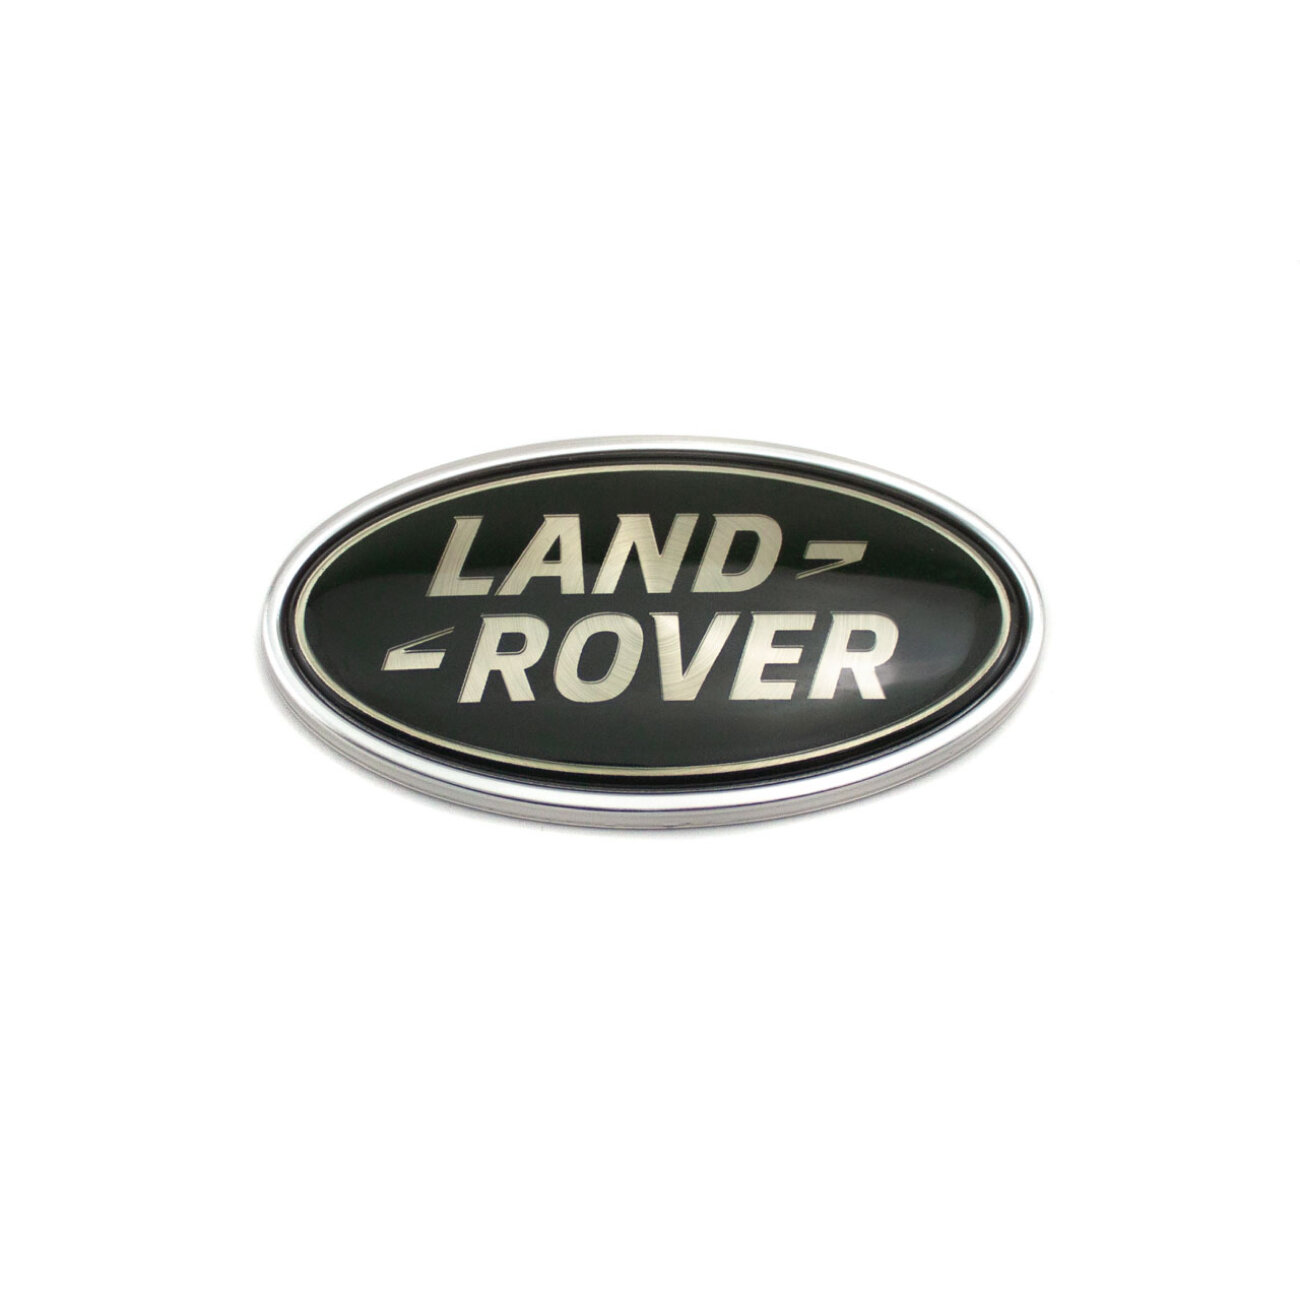 Эмблема на багажник Land Rover темно зеленая